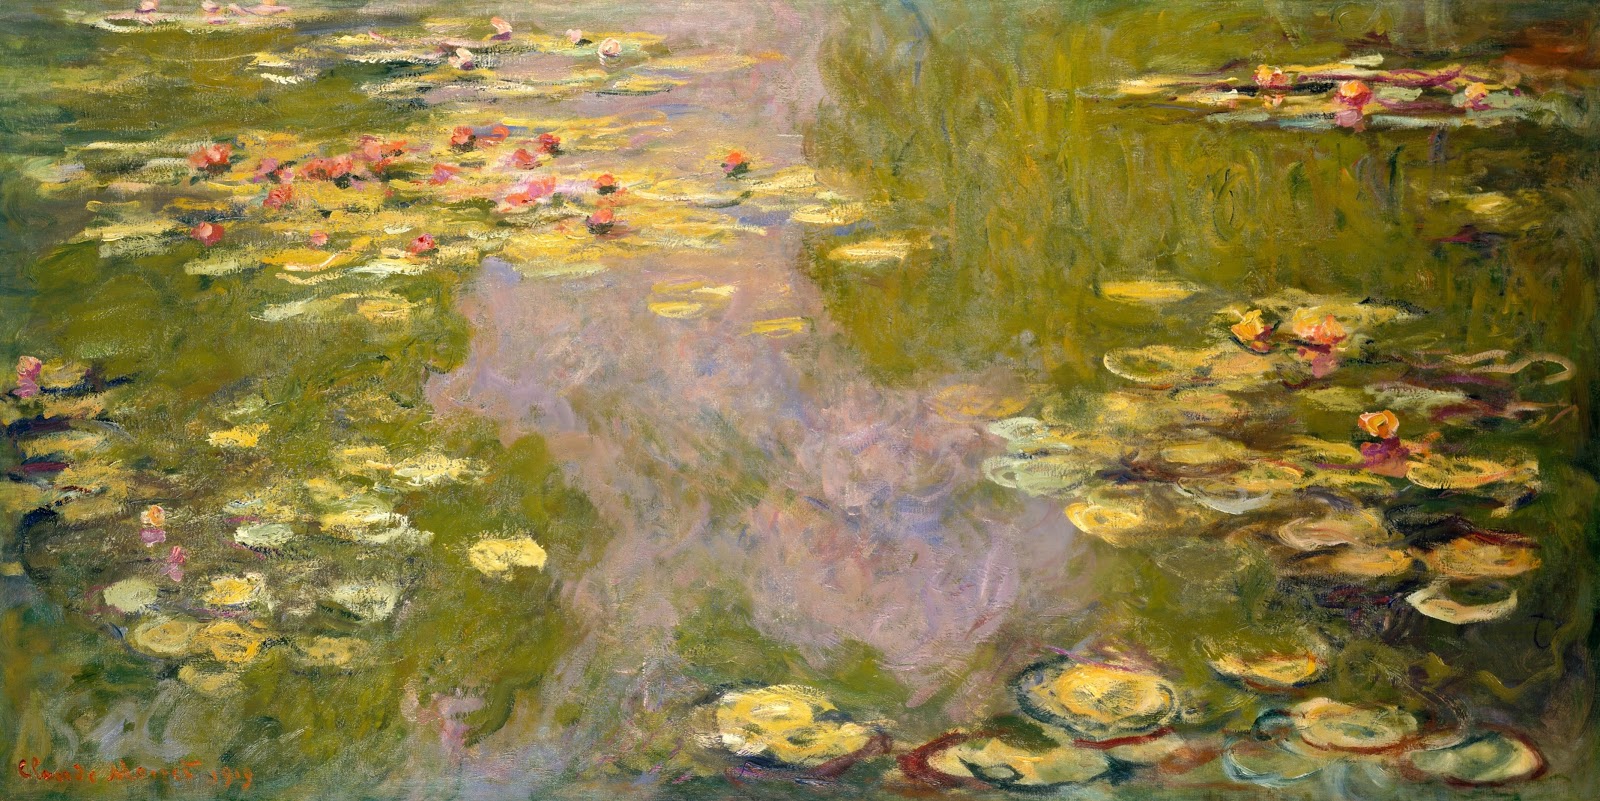 Claude+Monet-1840-1926 (413).jpg